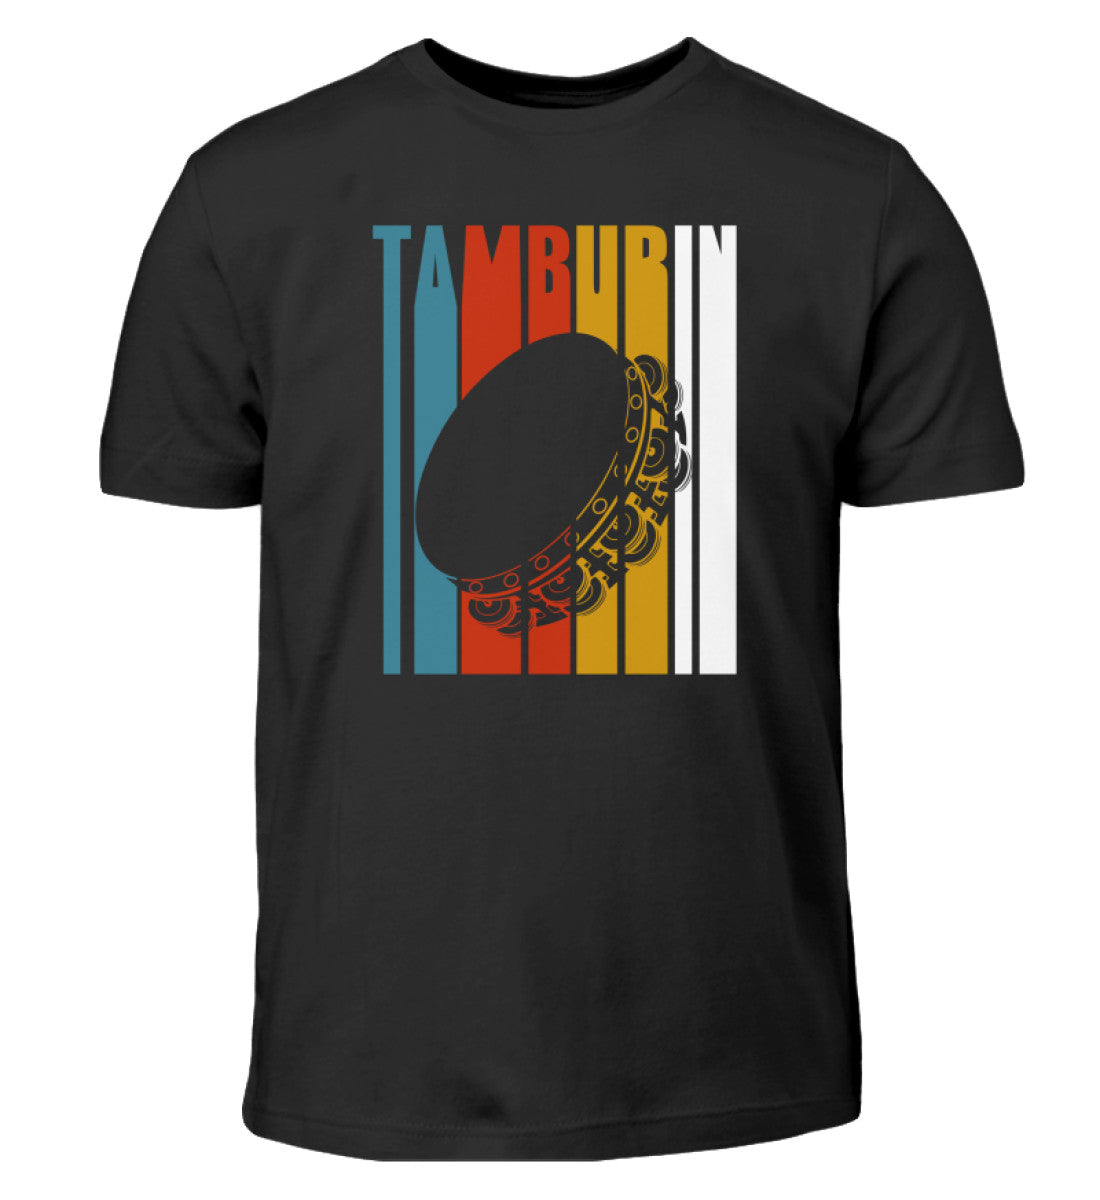 Tamburin Kinder T-Shirt